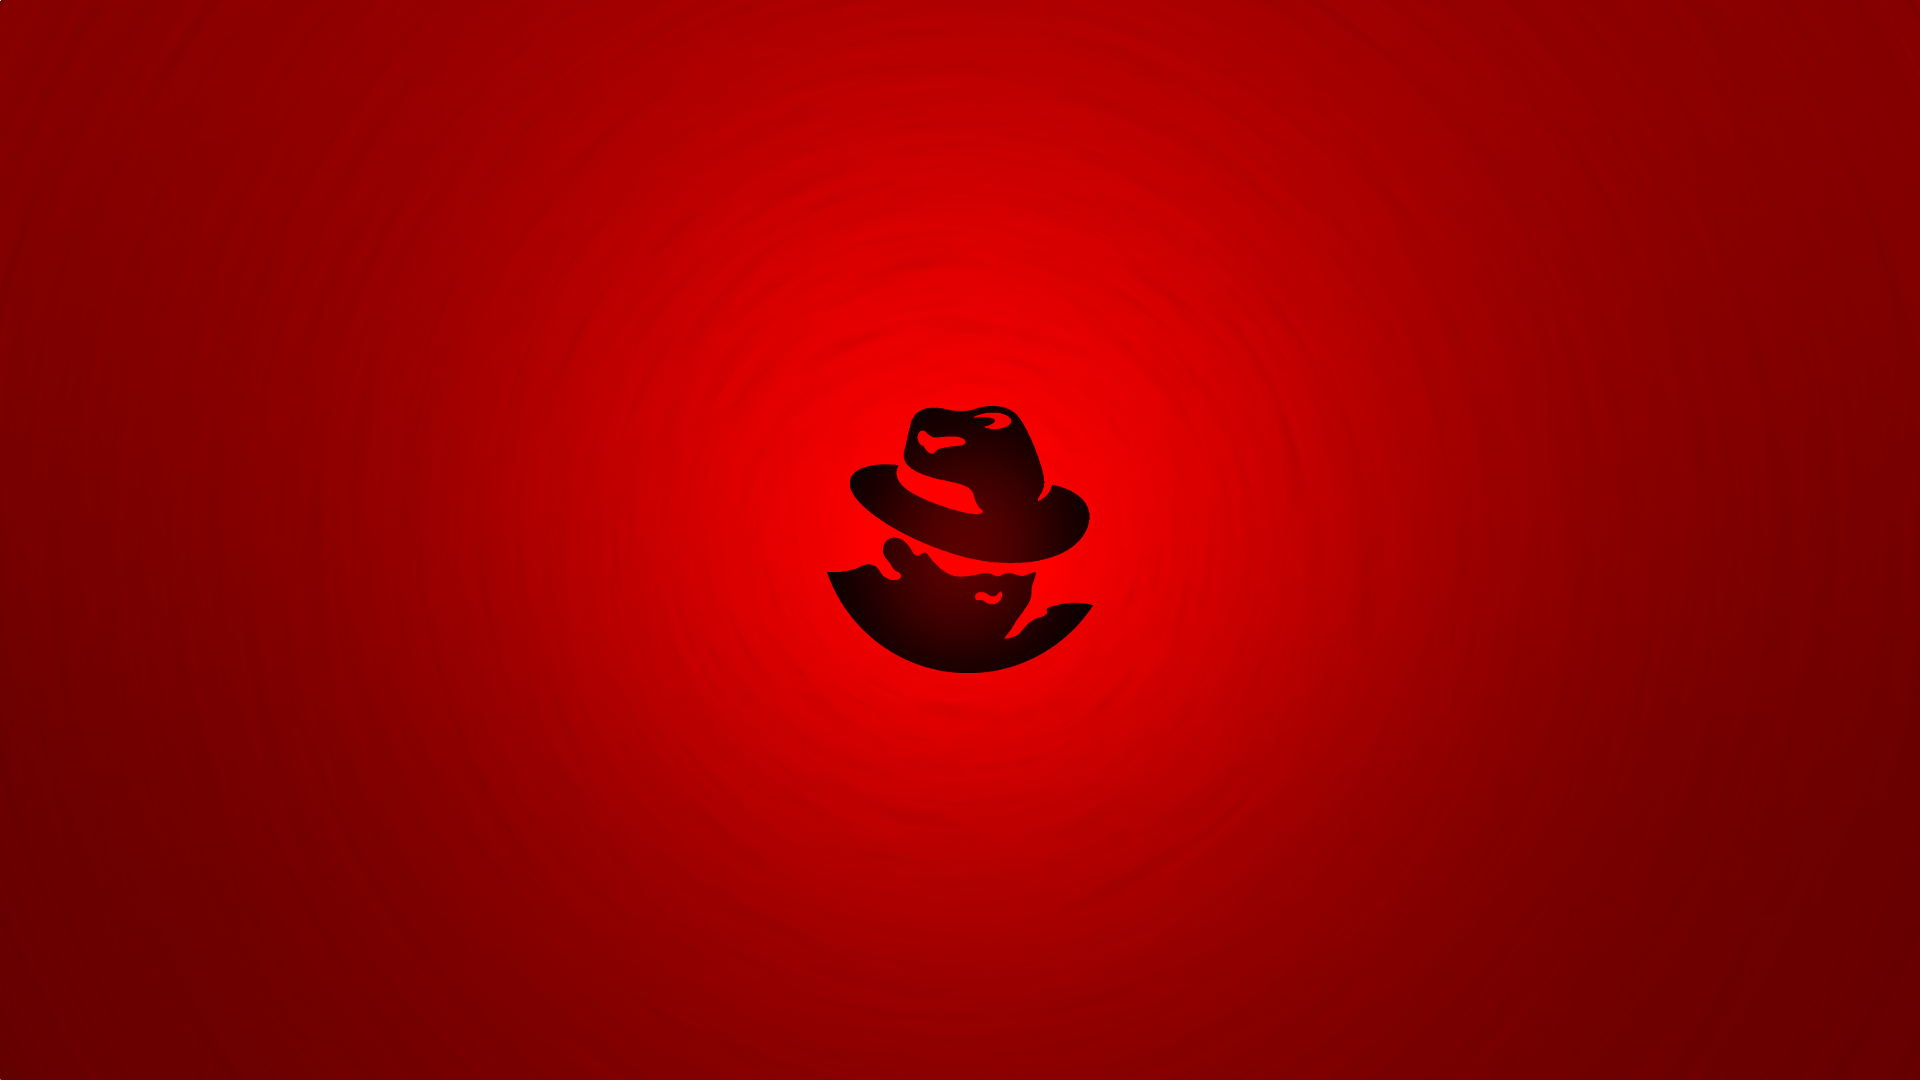 Ред хат. Редхат линукс. Red hat. Обои Red hat. Rad hat заставка.